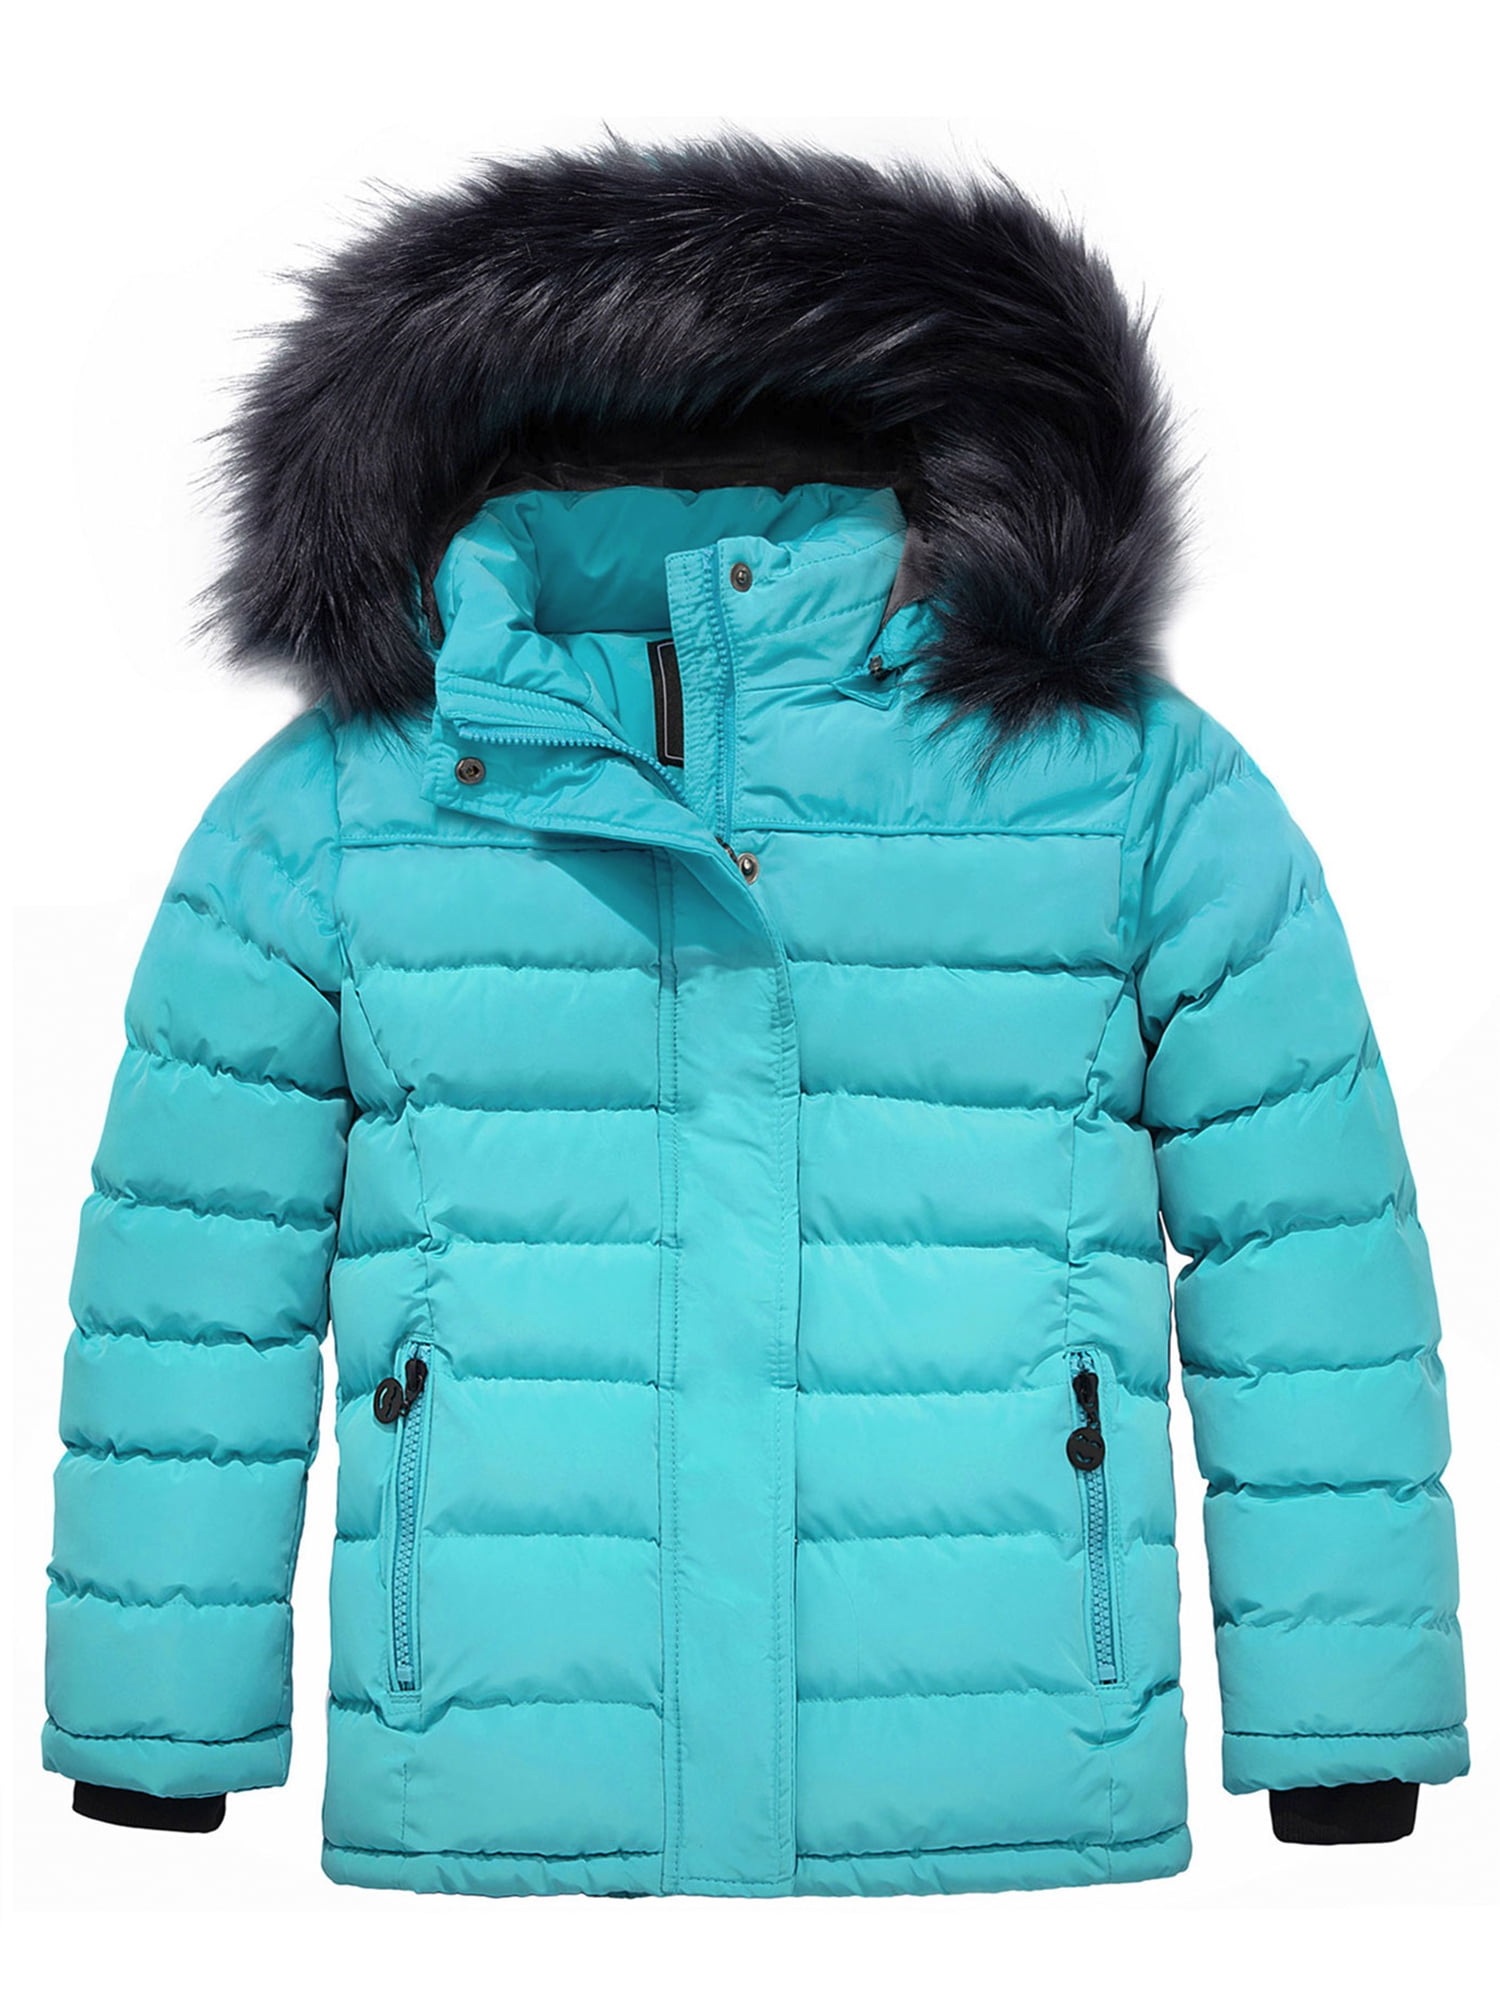 ZSHOW Girls' Puffer Jacket Windproof Winter Parka Coat Hooded Parka ...